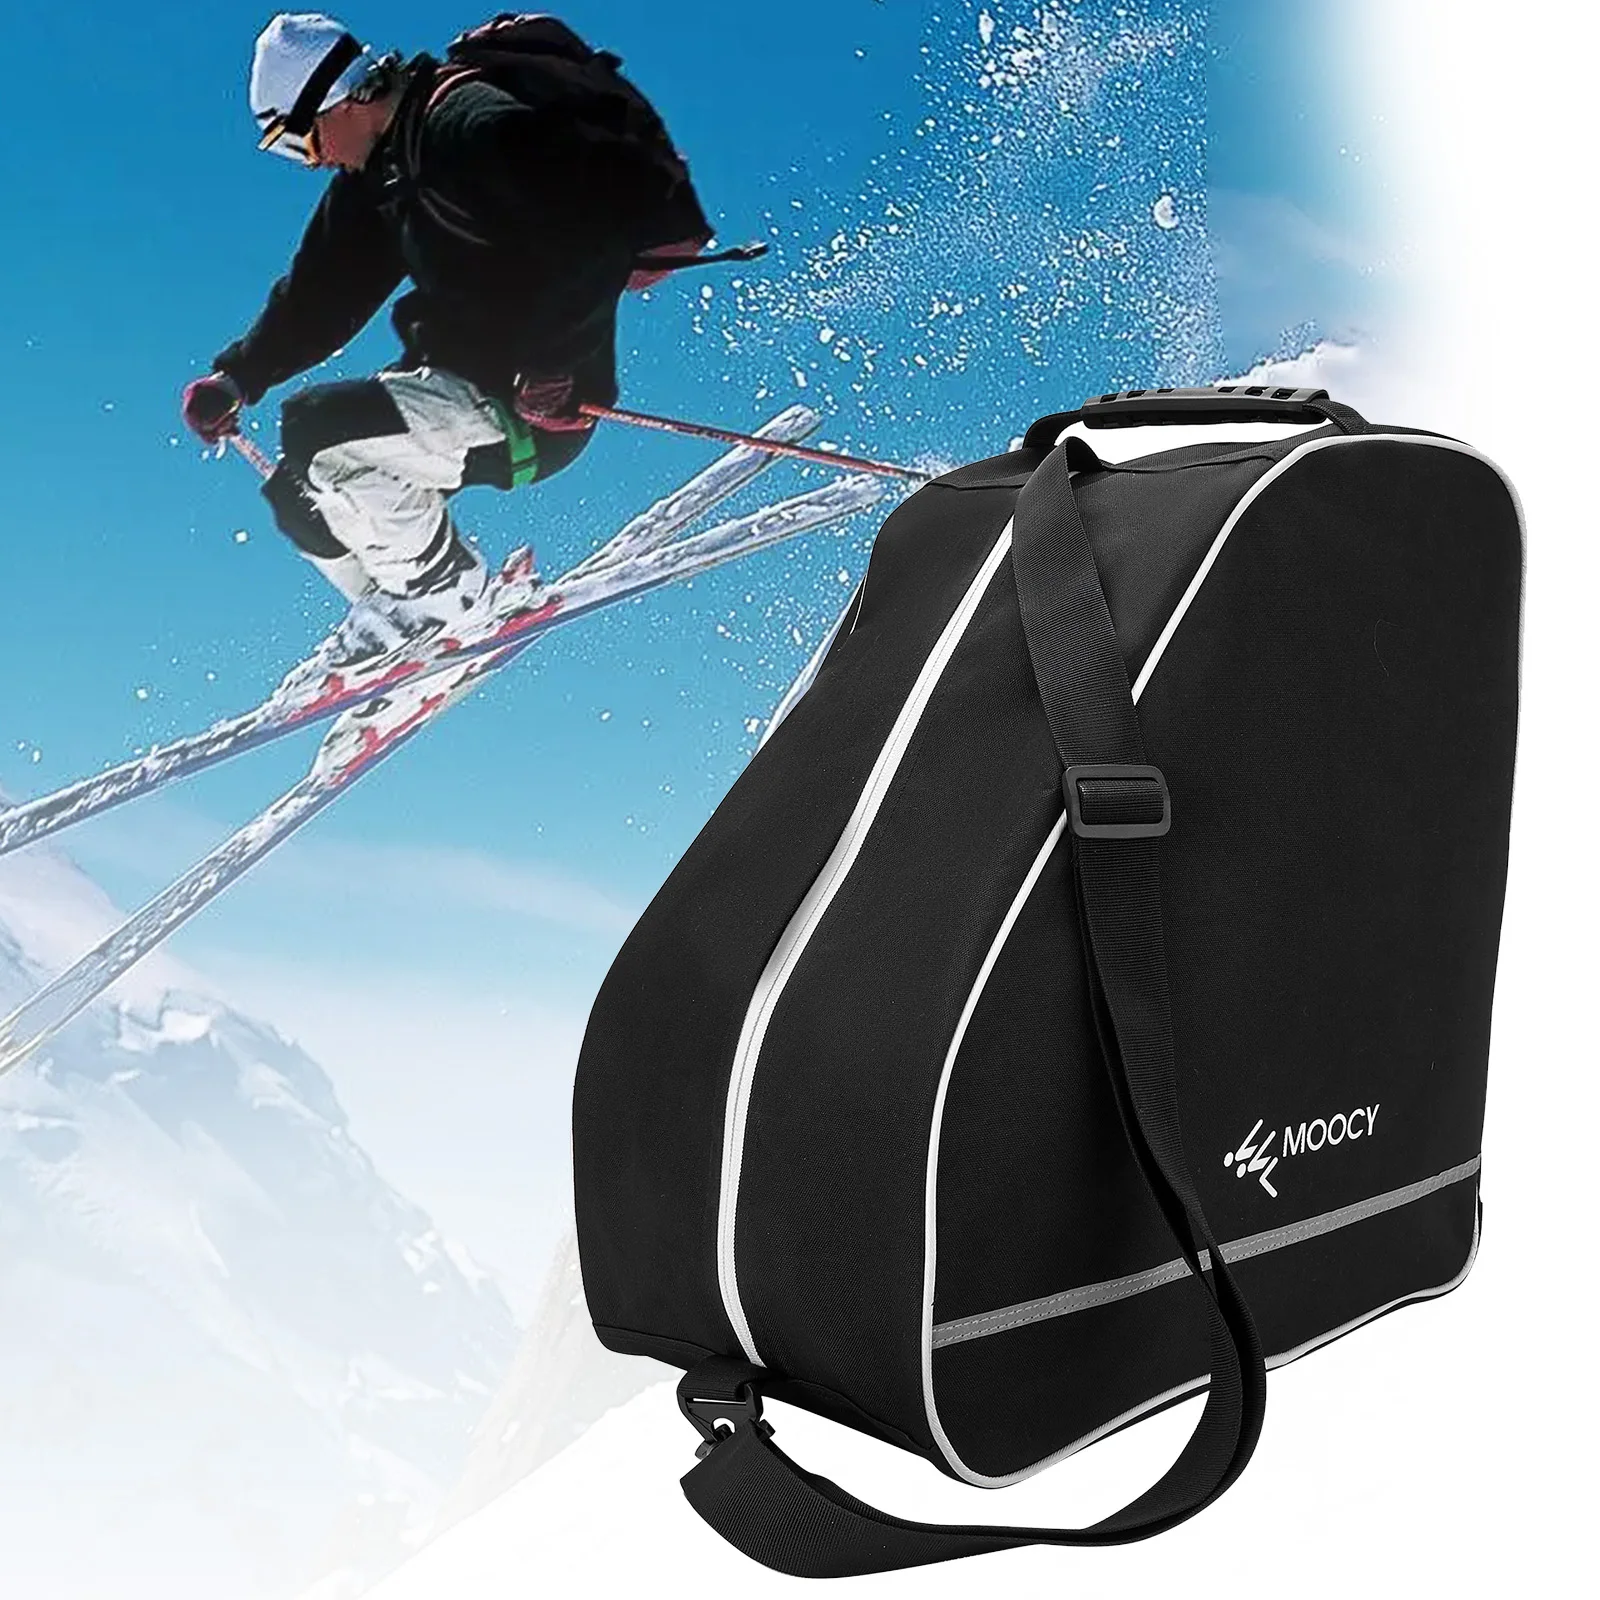 

Multipurpose Ski Boot Bag Waterproof Oxford Cloth Ski Equipment Bag with Anti Slip Rubbers for Ski Boot Helmet Goggles Gloves